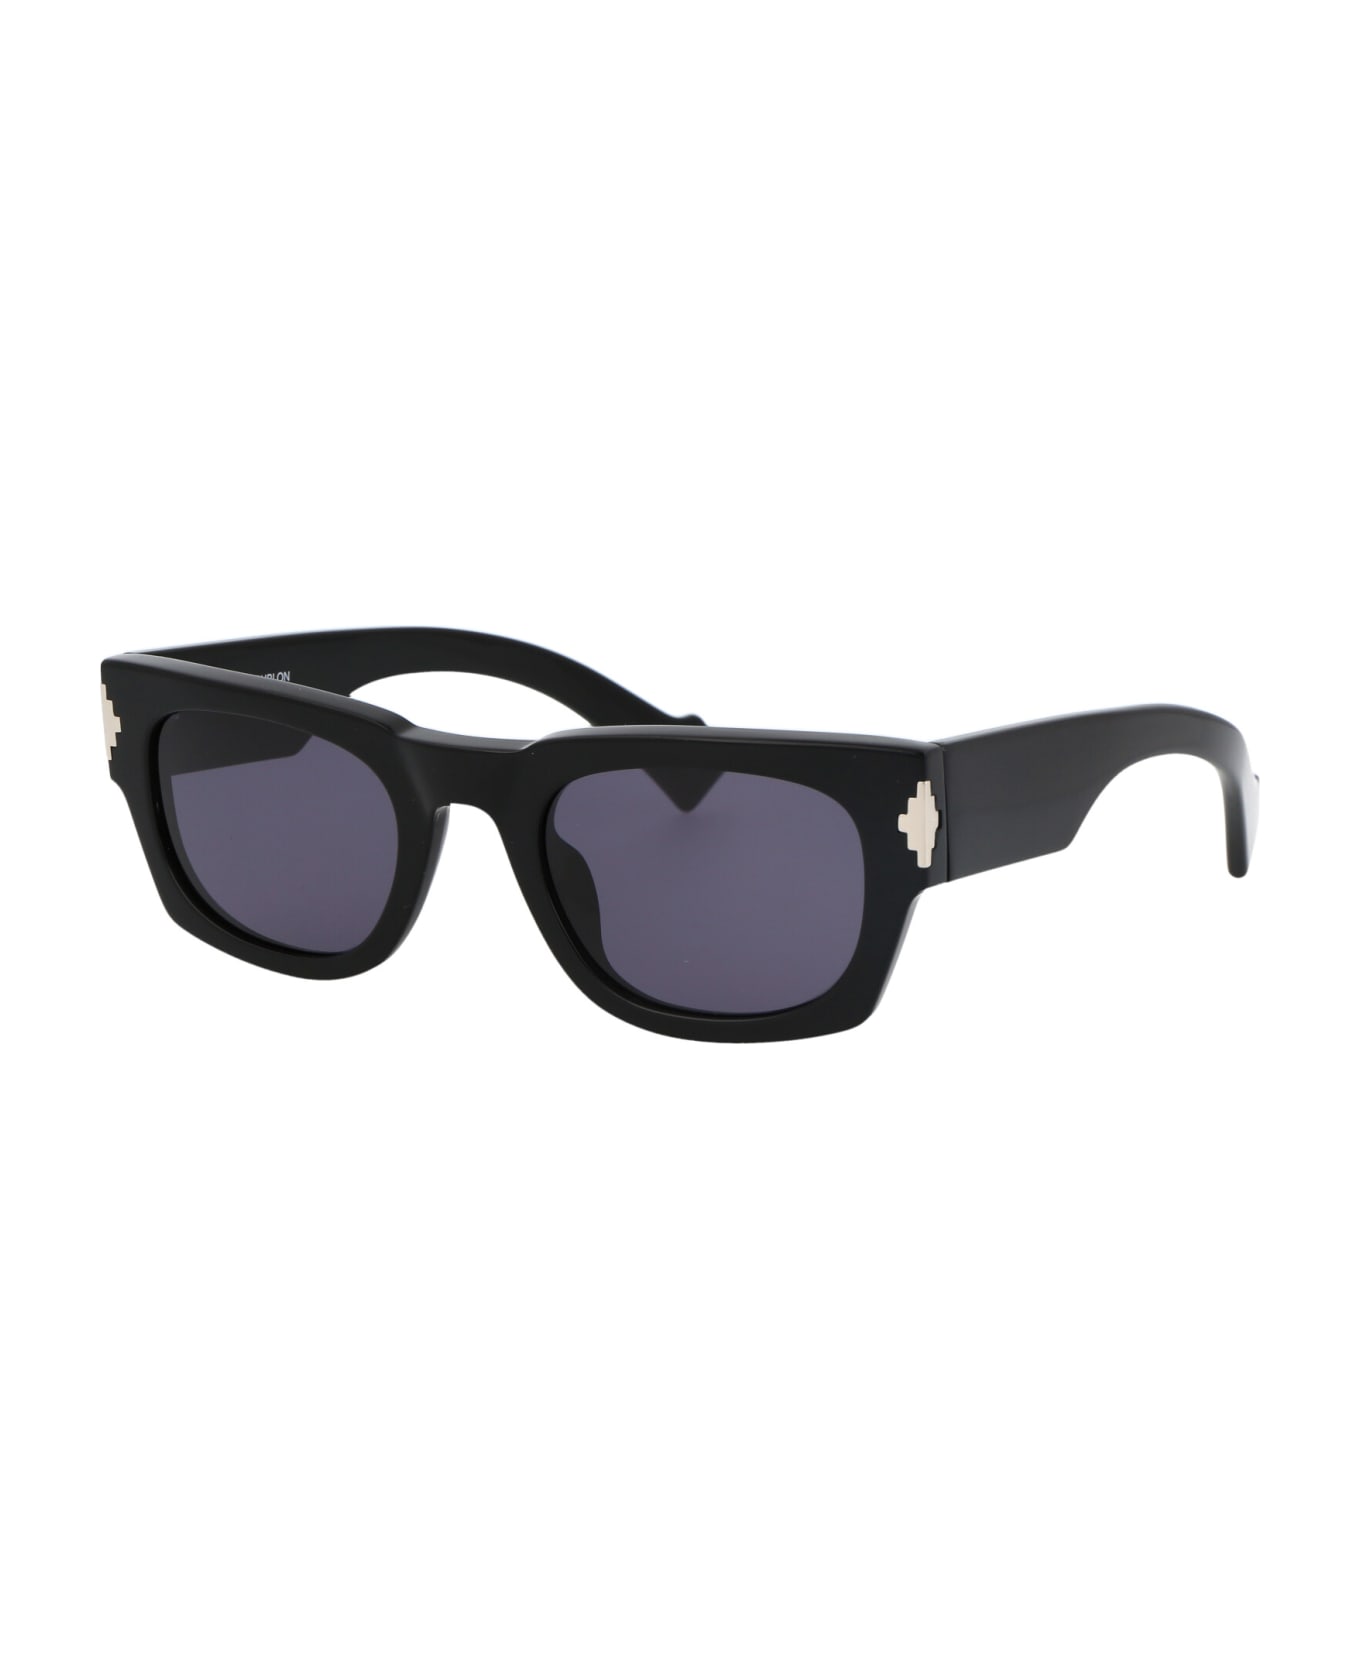 Marcelo Burlon Calafate Sunglasses - 1007 BLACK DARK GREY